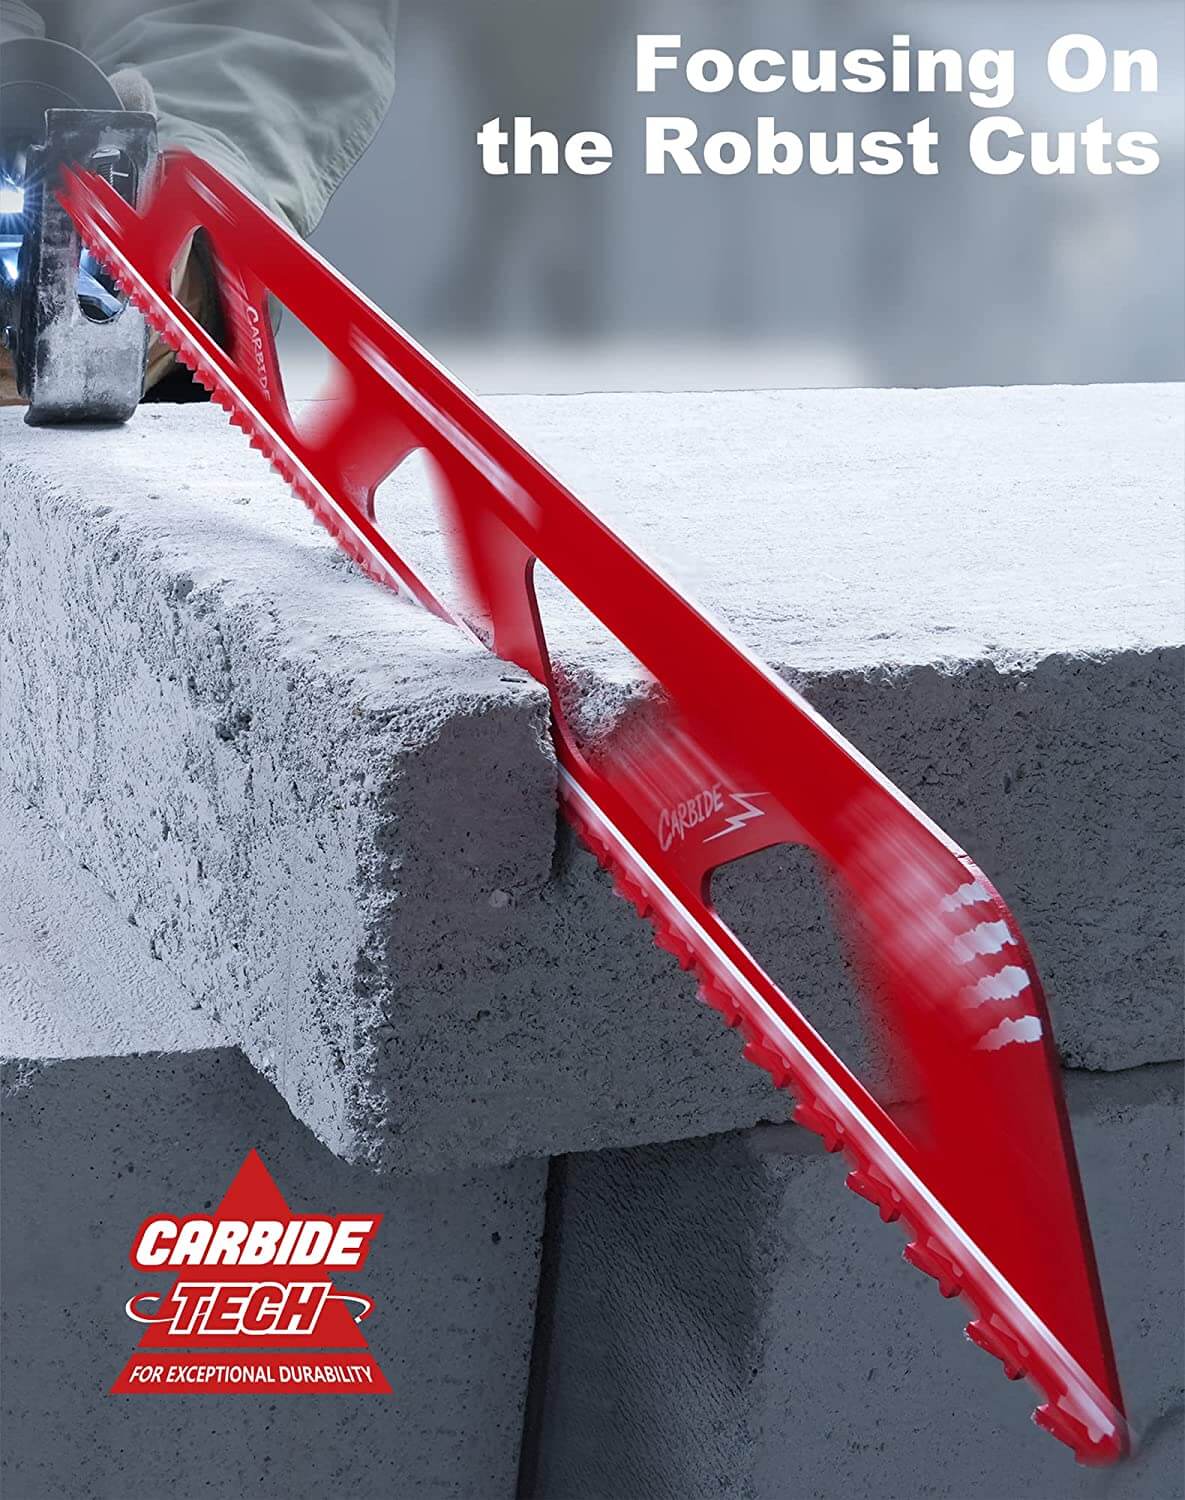 12 & 18 Inch Carbide Demolition Masonry Reciprocating Saw Blade For Cutting Brick,Concrete